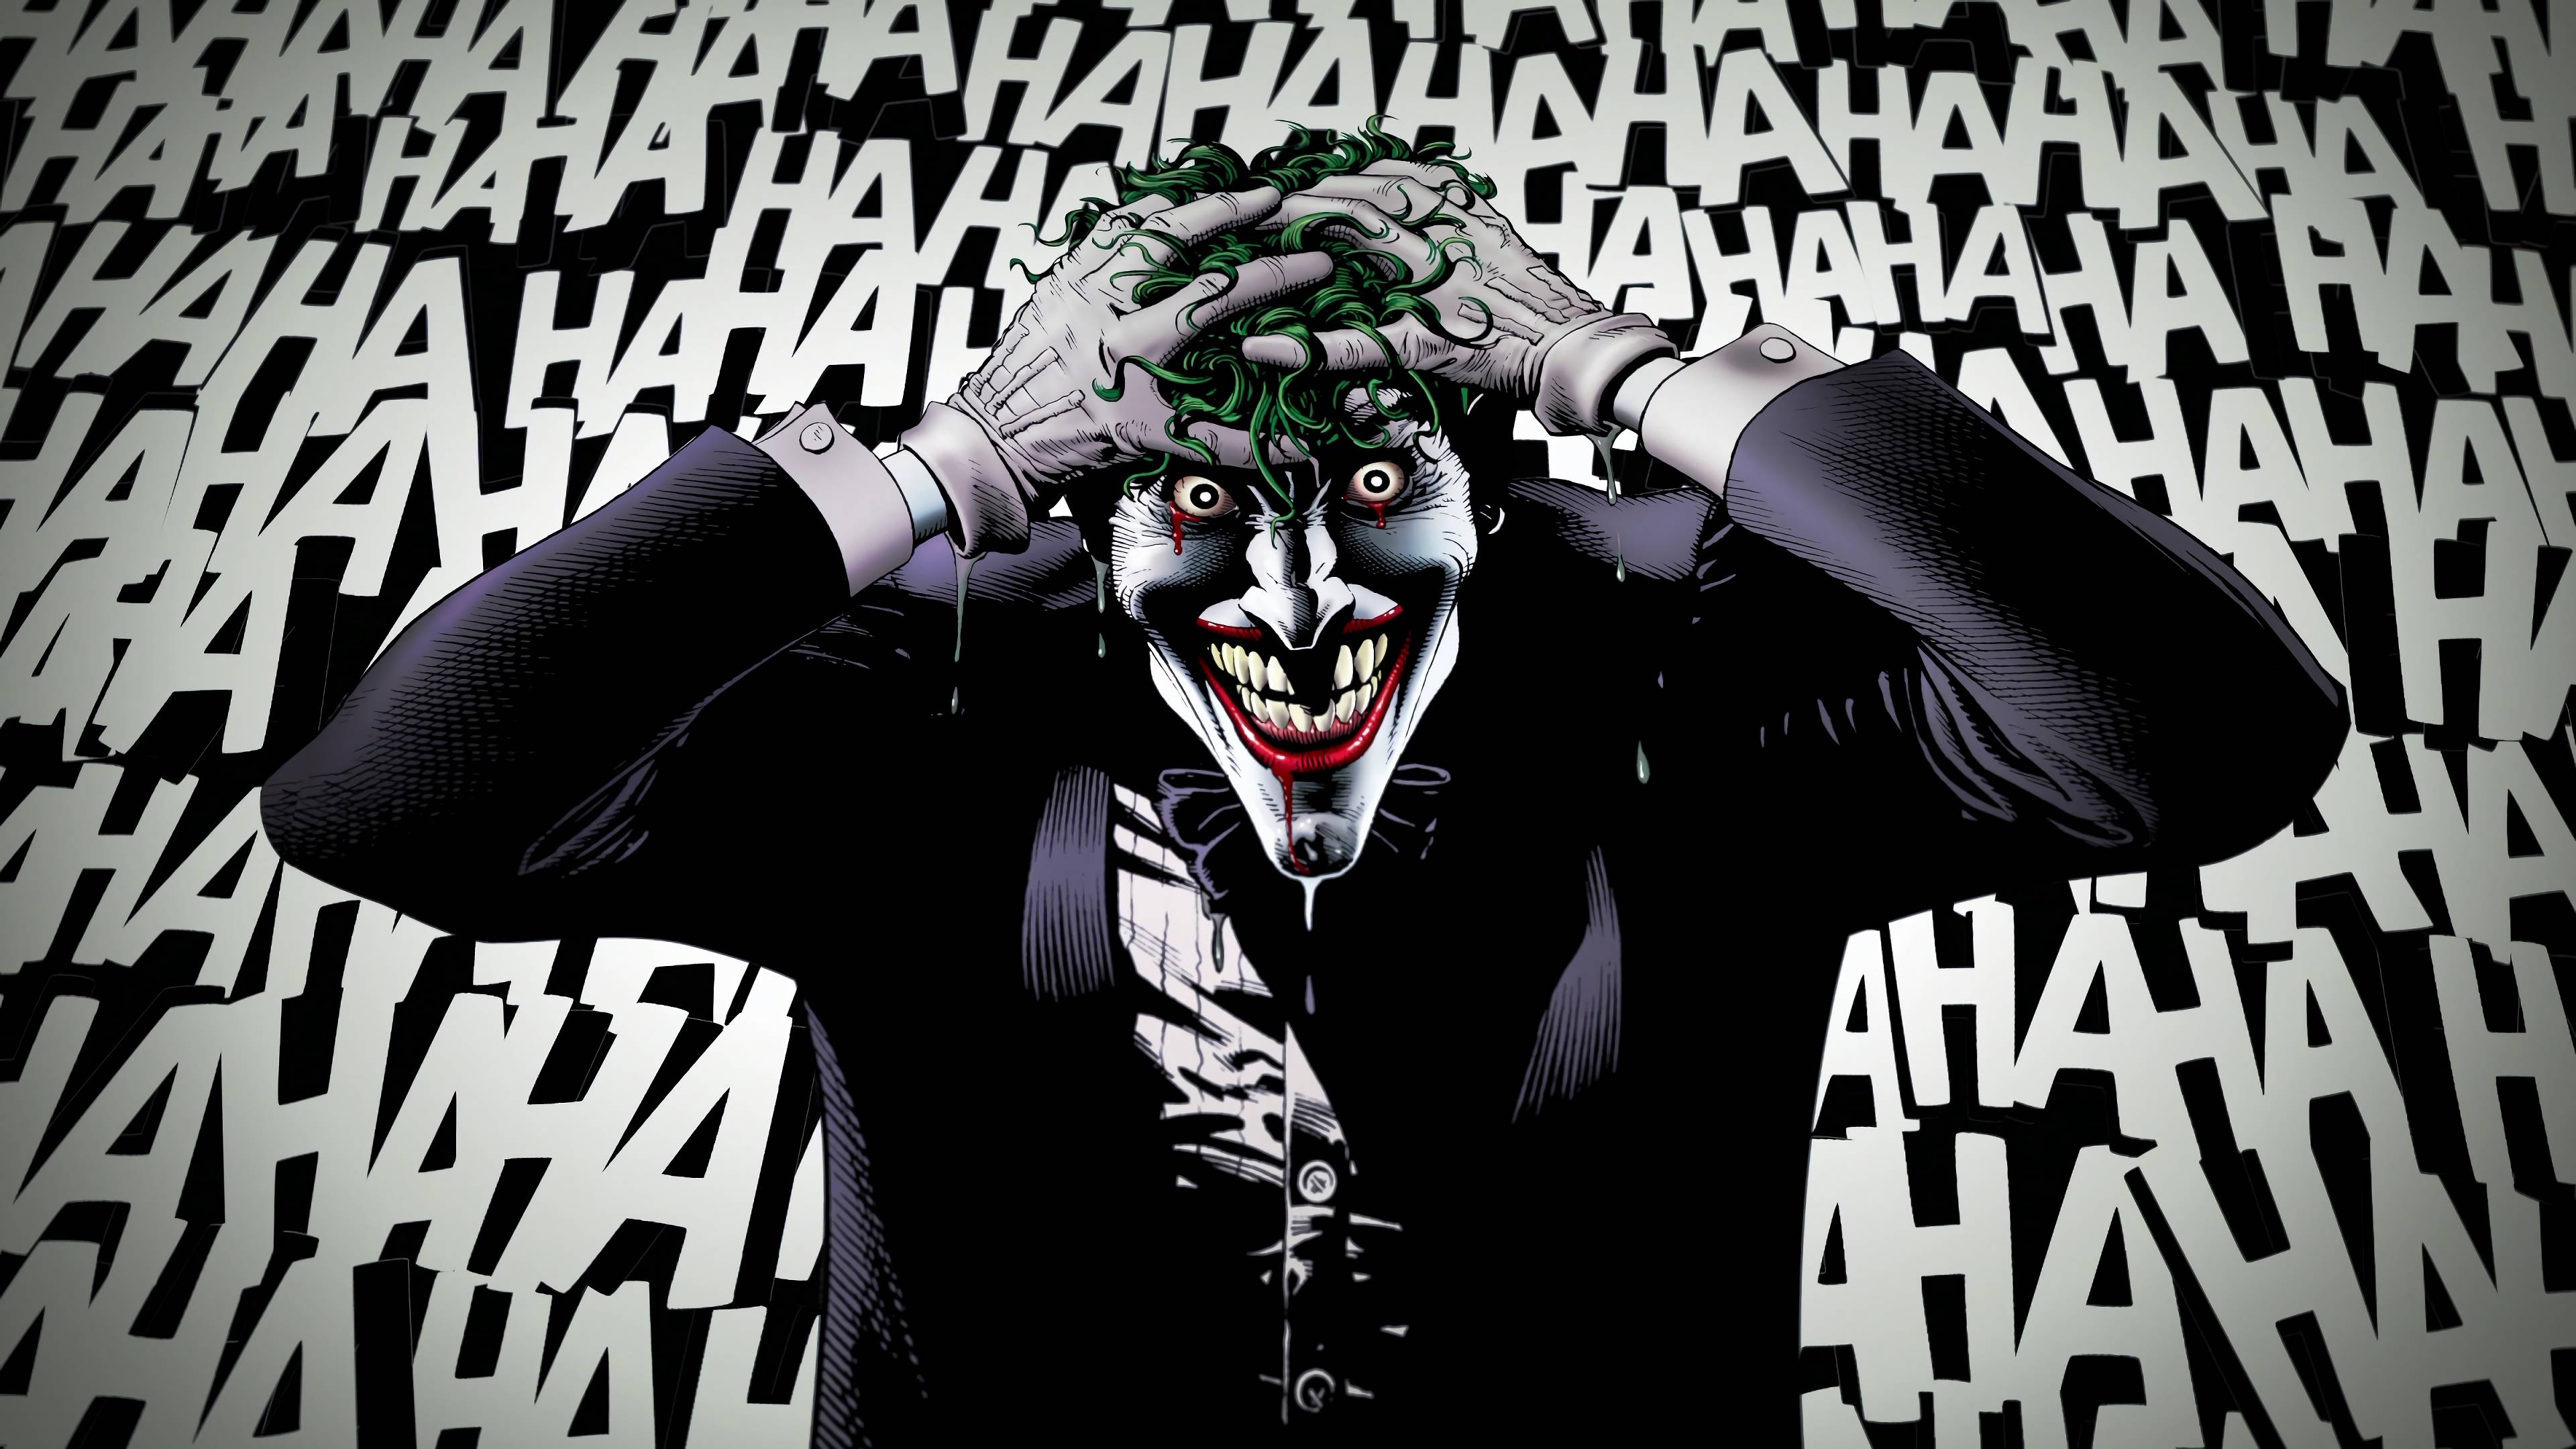 Joker Laughing Wallpapers Wallpaper Cave